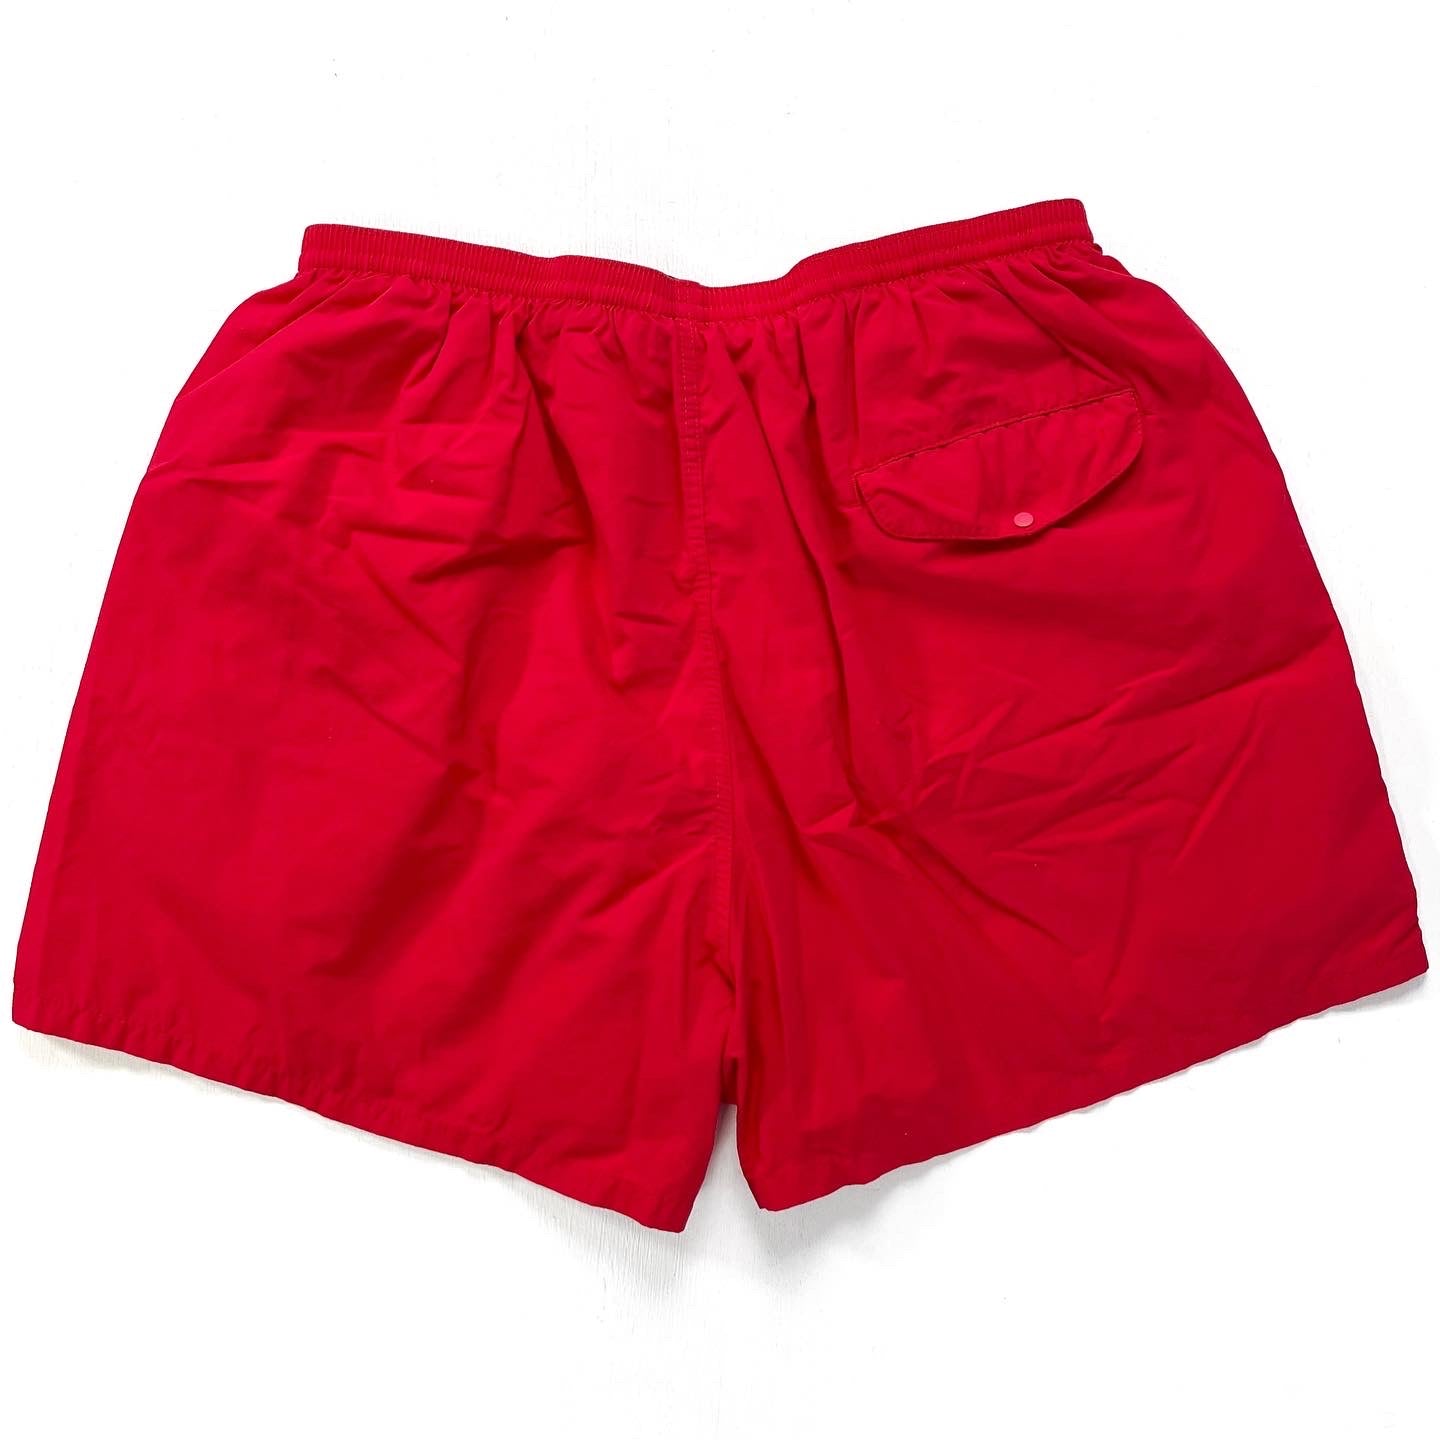 2000 Patagonia Mens 4” Nylon Baggies Shorts, Phoenix Red (L)